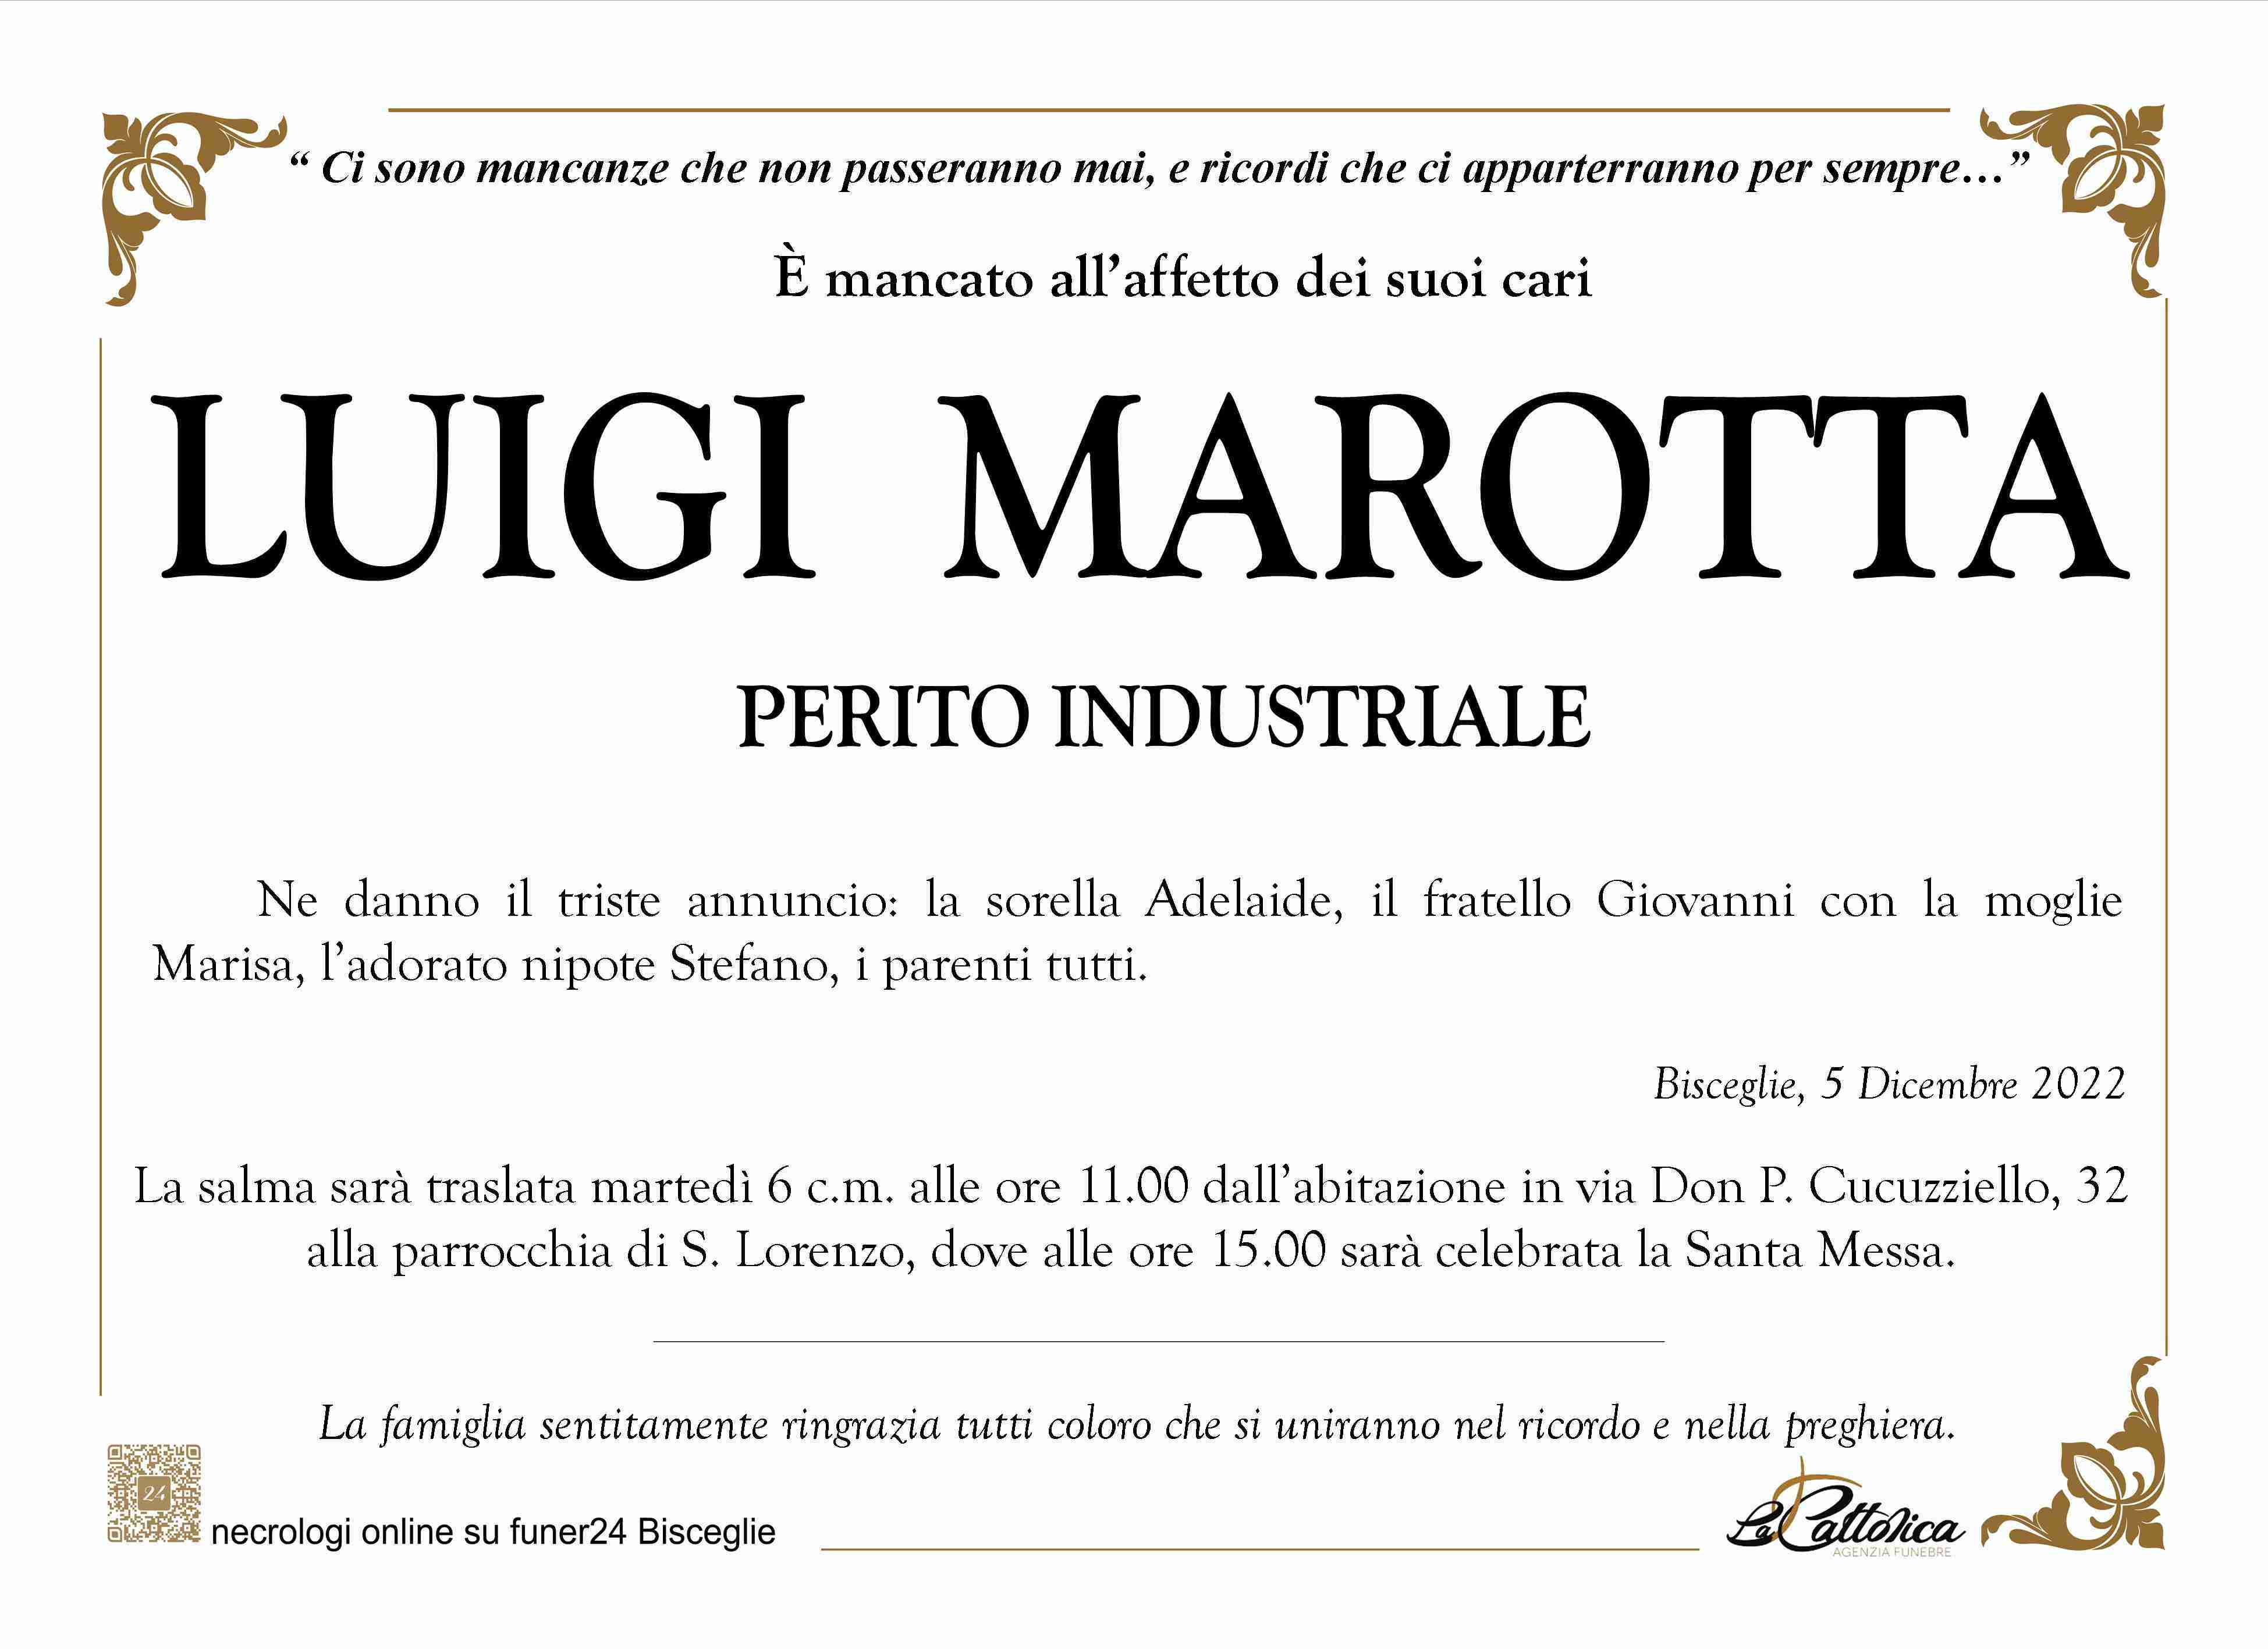 Luigi Marotta